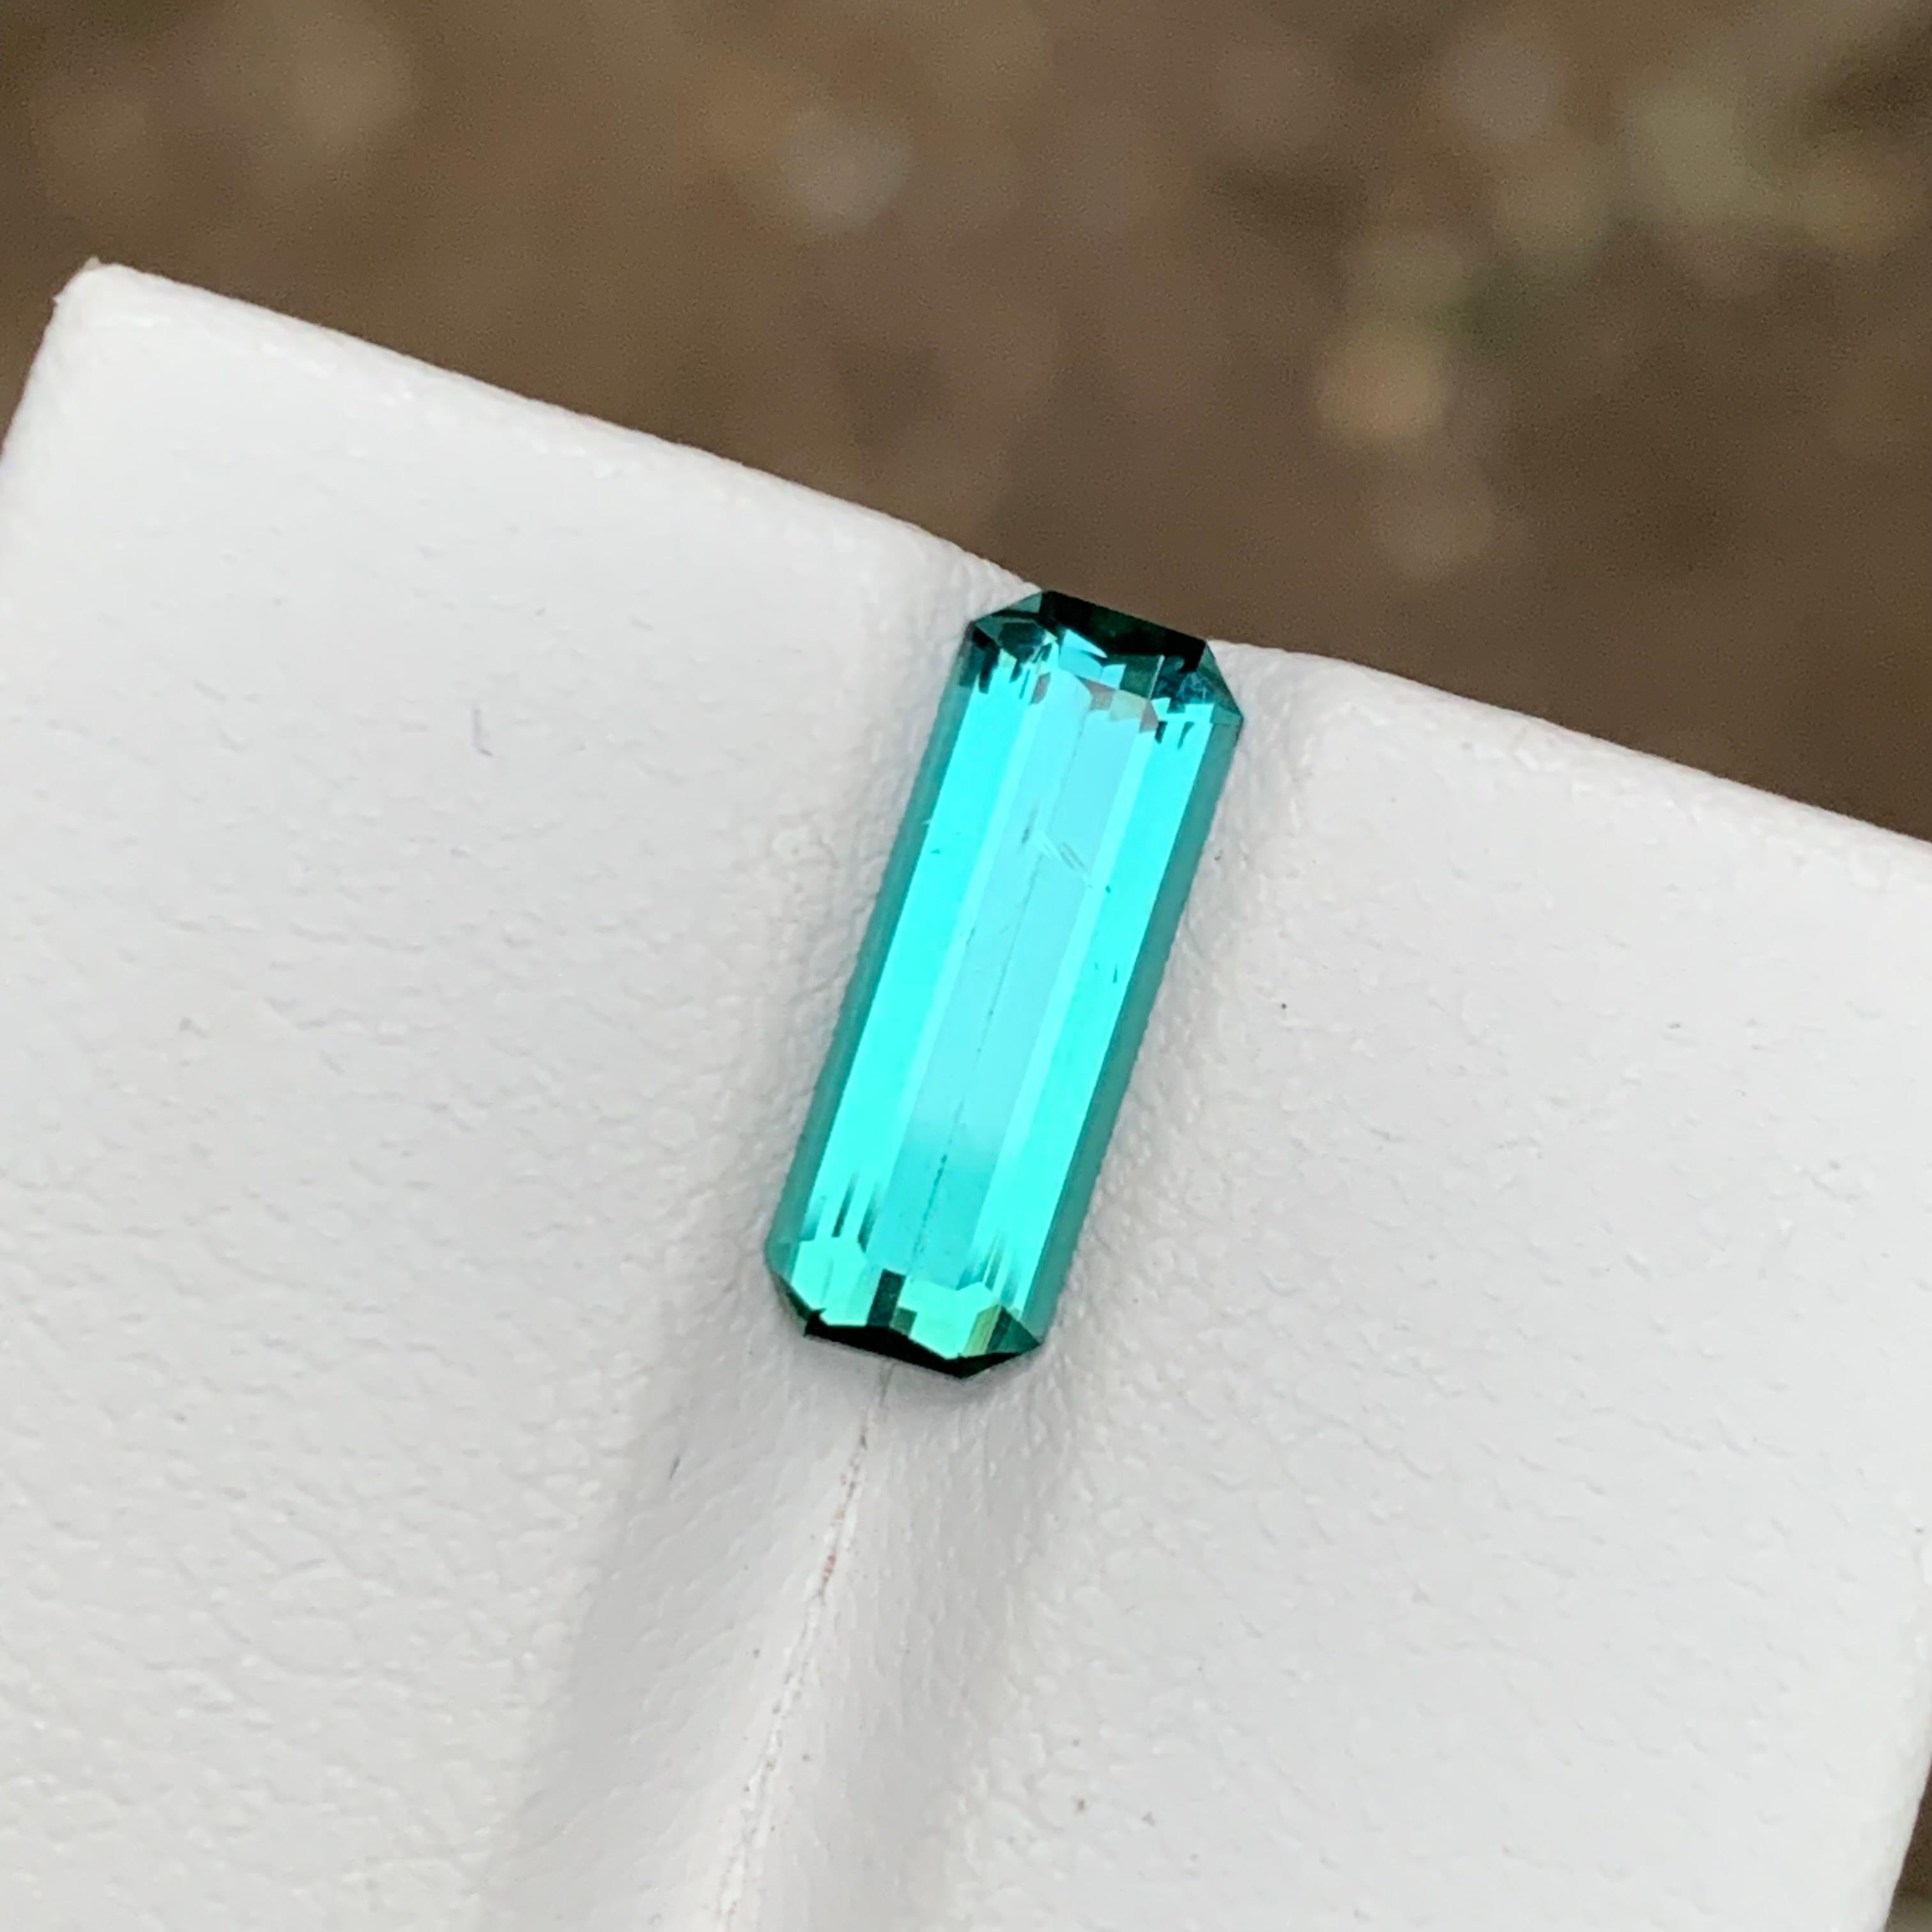 Rare Vivid Neon Bluish Green Hue Tourmaline Gemstone 1.75Ct Emerald Cut for Ring For Sale 7